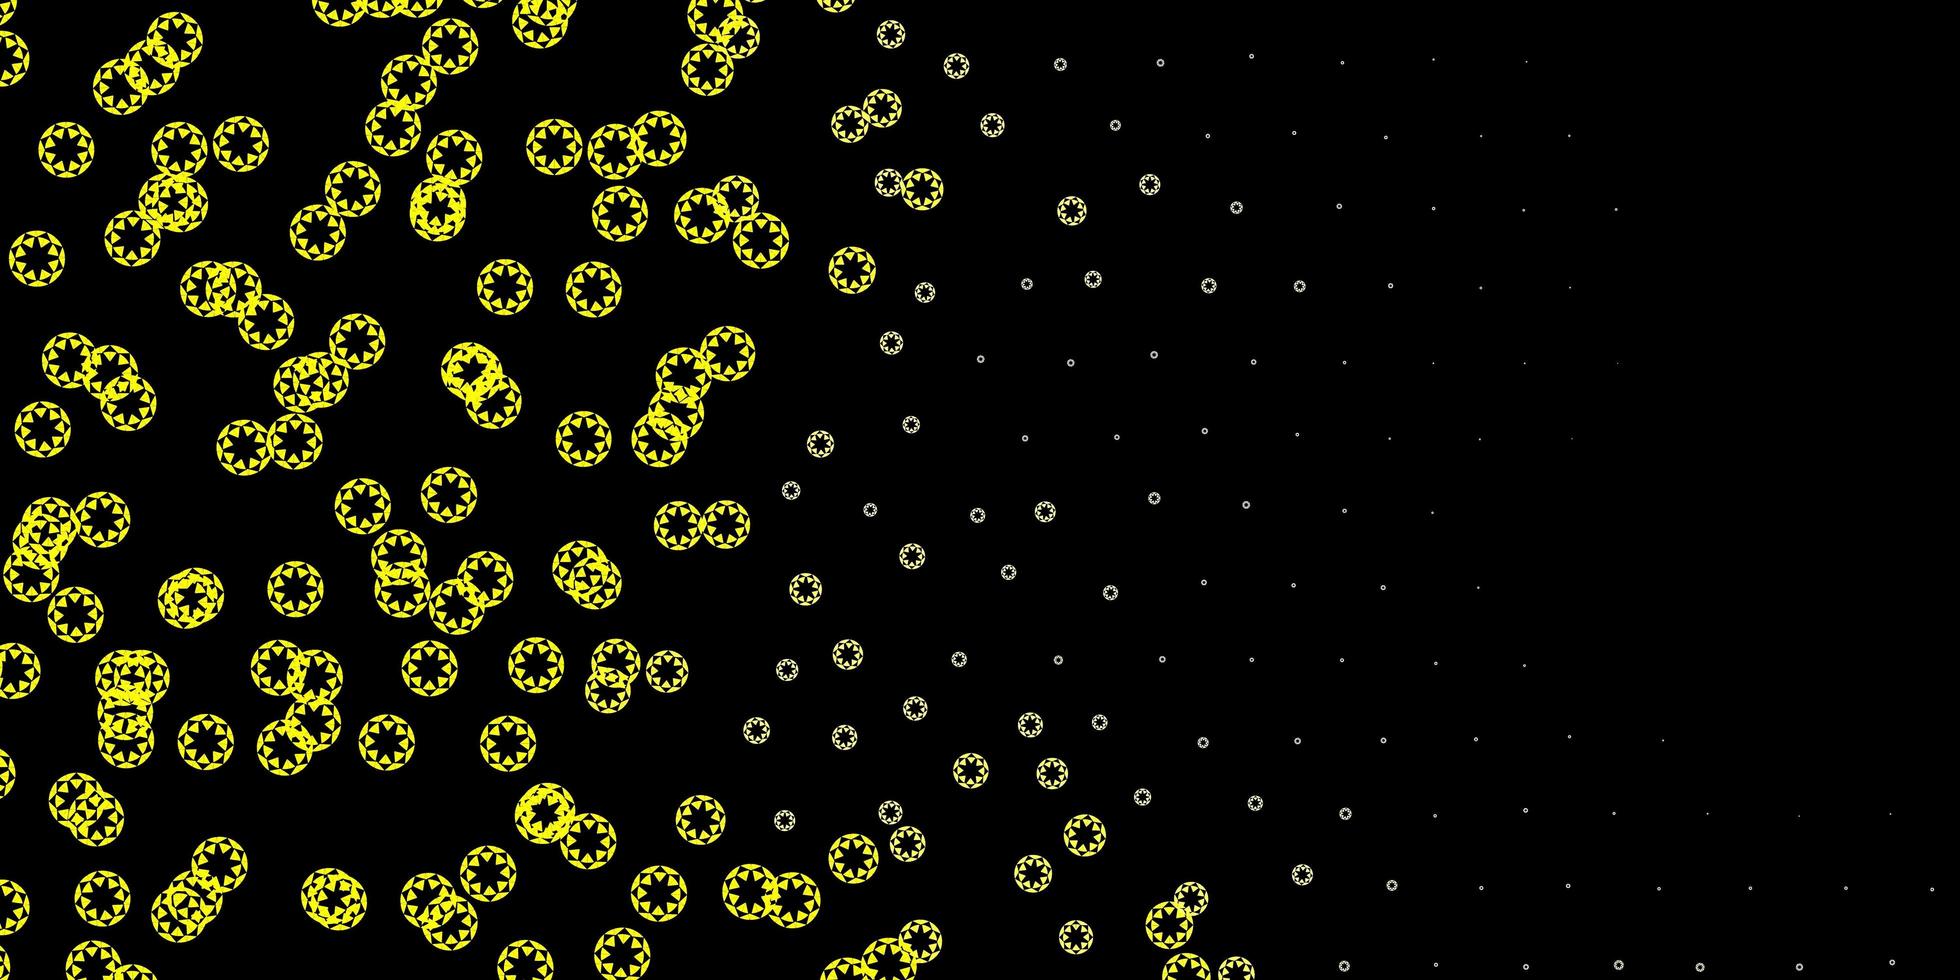 Dark yellow vector pattern with spheres